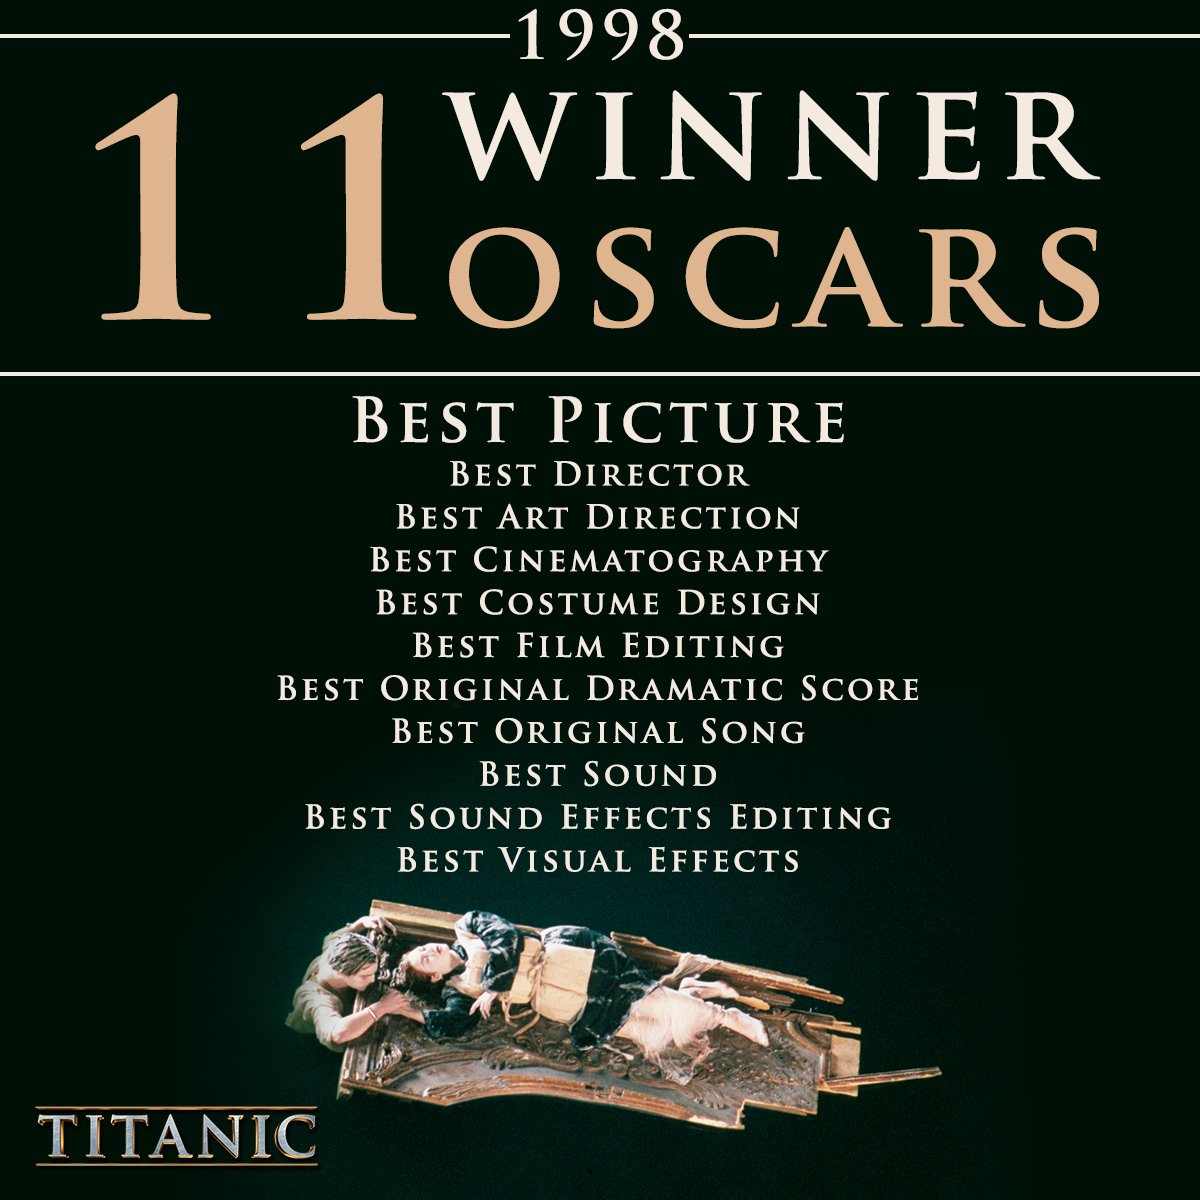 Image result for titanic movie won oscar